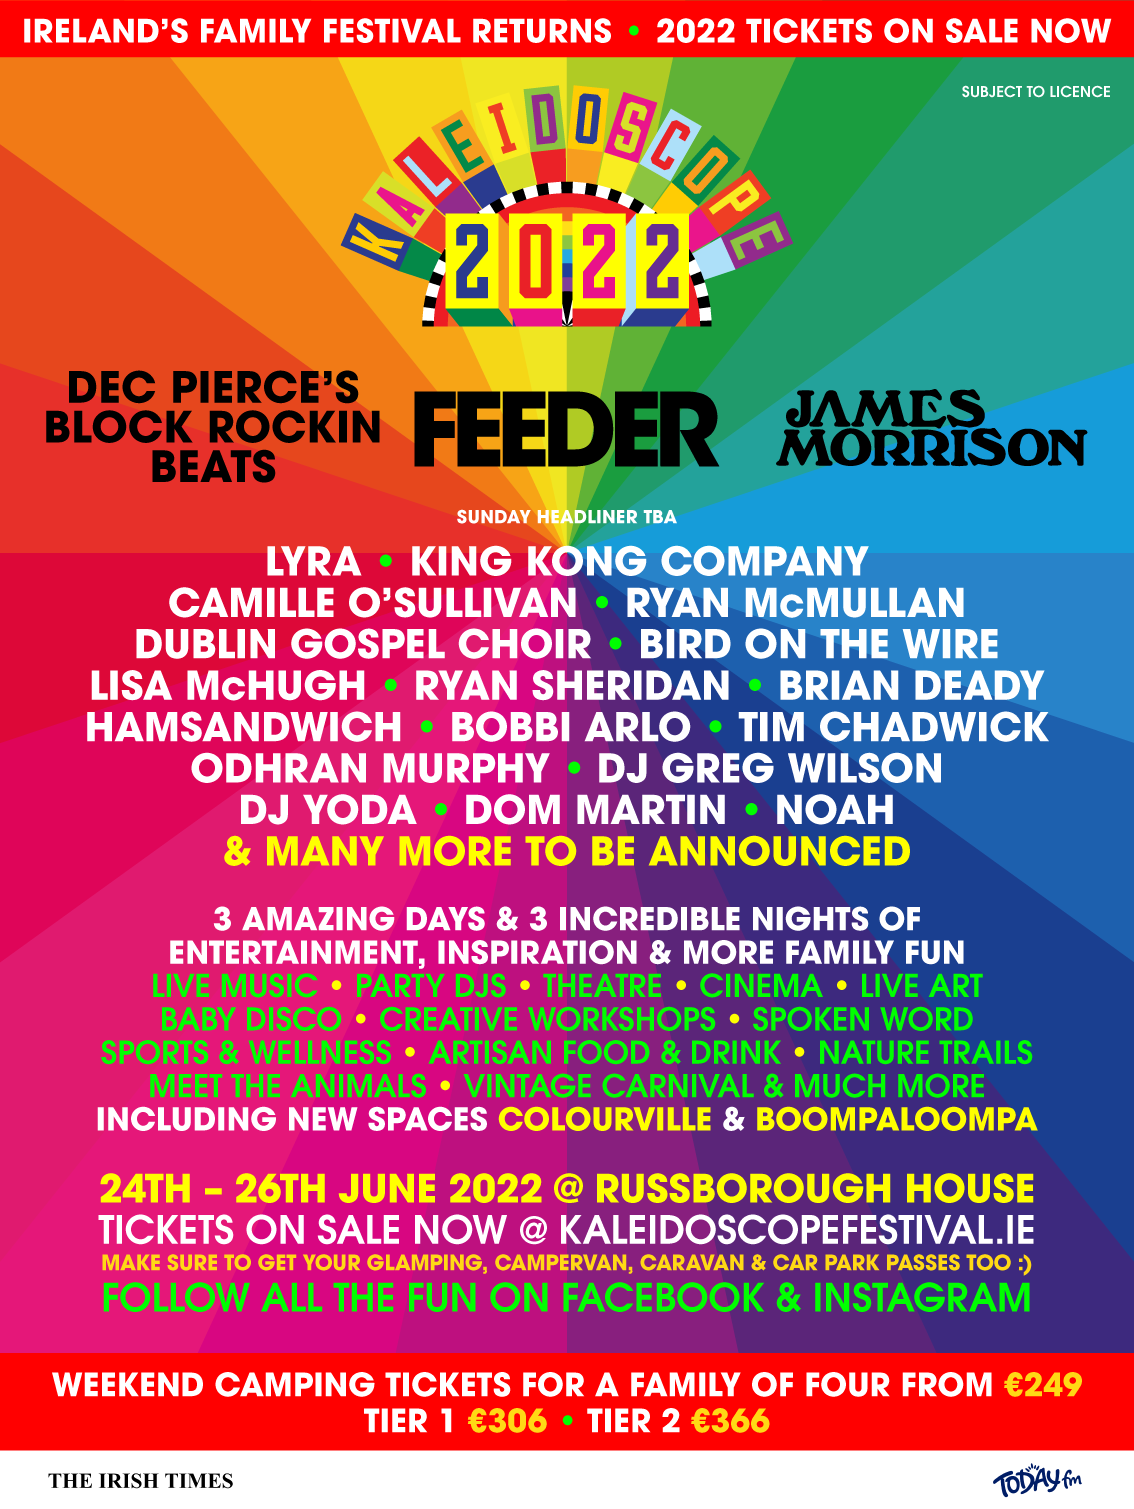 Kaleidoscope Festival Ireland hap Solutions Group